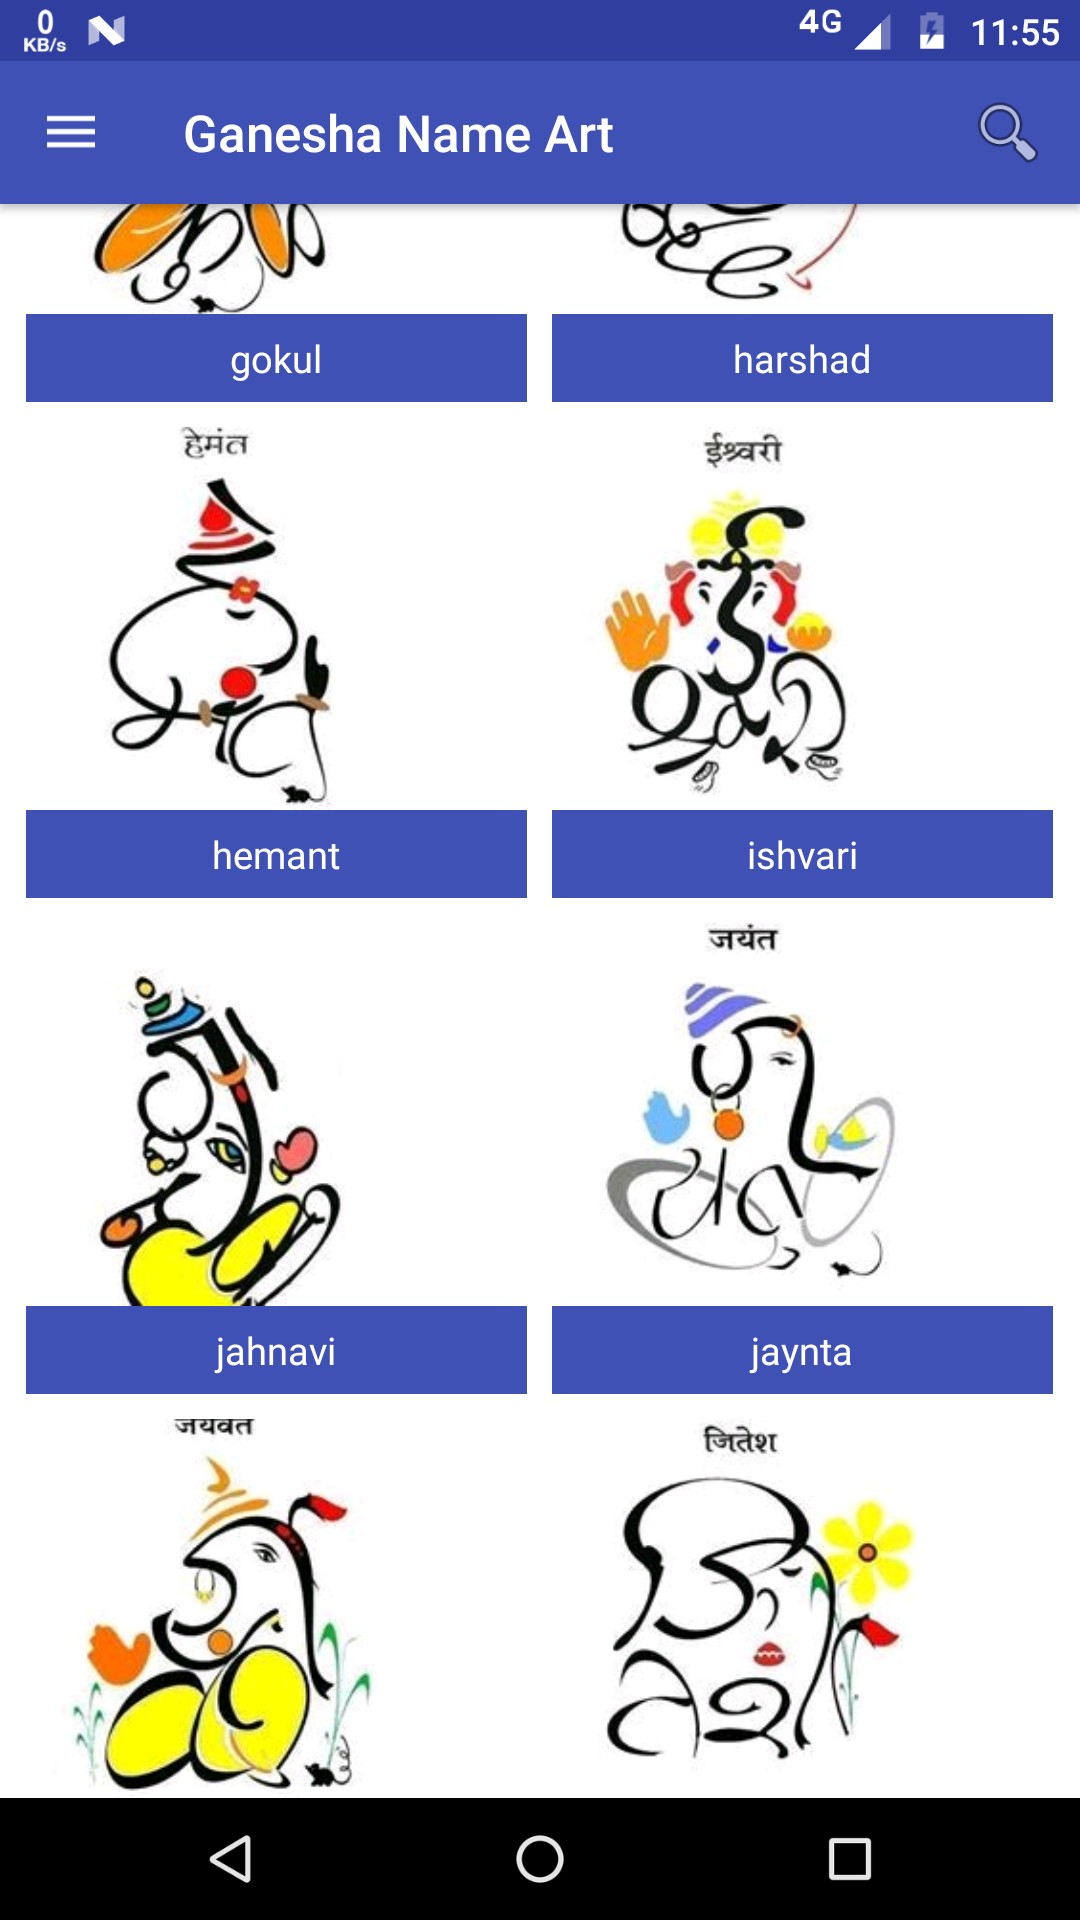 Ganesha Name Art Apk 1 0 Download For Android Download Ganesha Name Art Apk Latest Version Apkfab Com